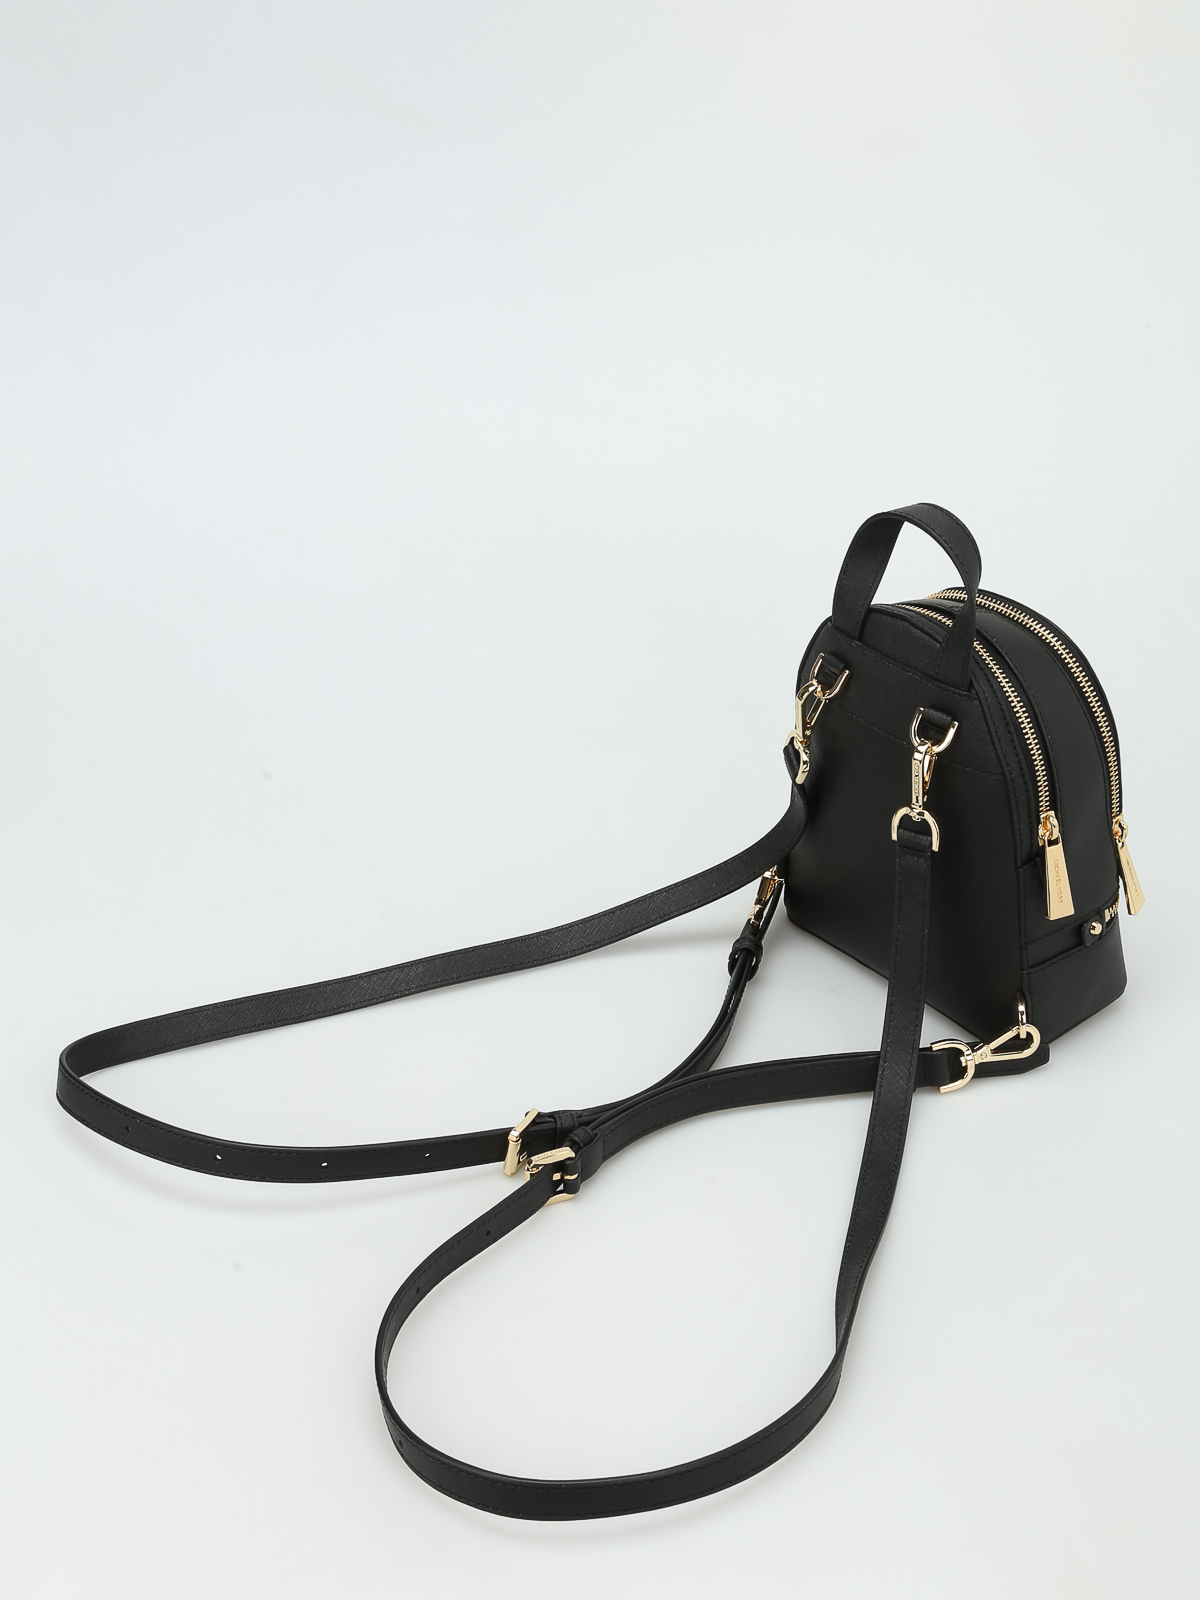 Michael Kors Mini Backpack Womens Fashion Bags  Wallets Backpacks on  Carousell